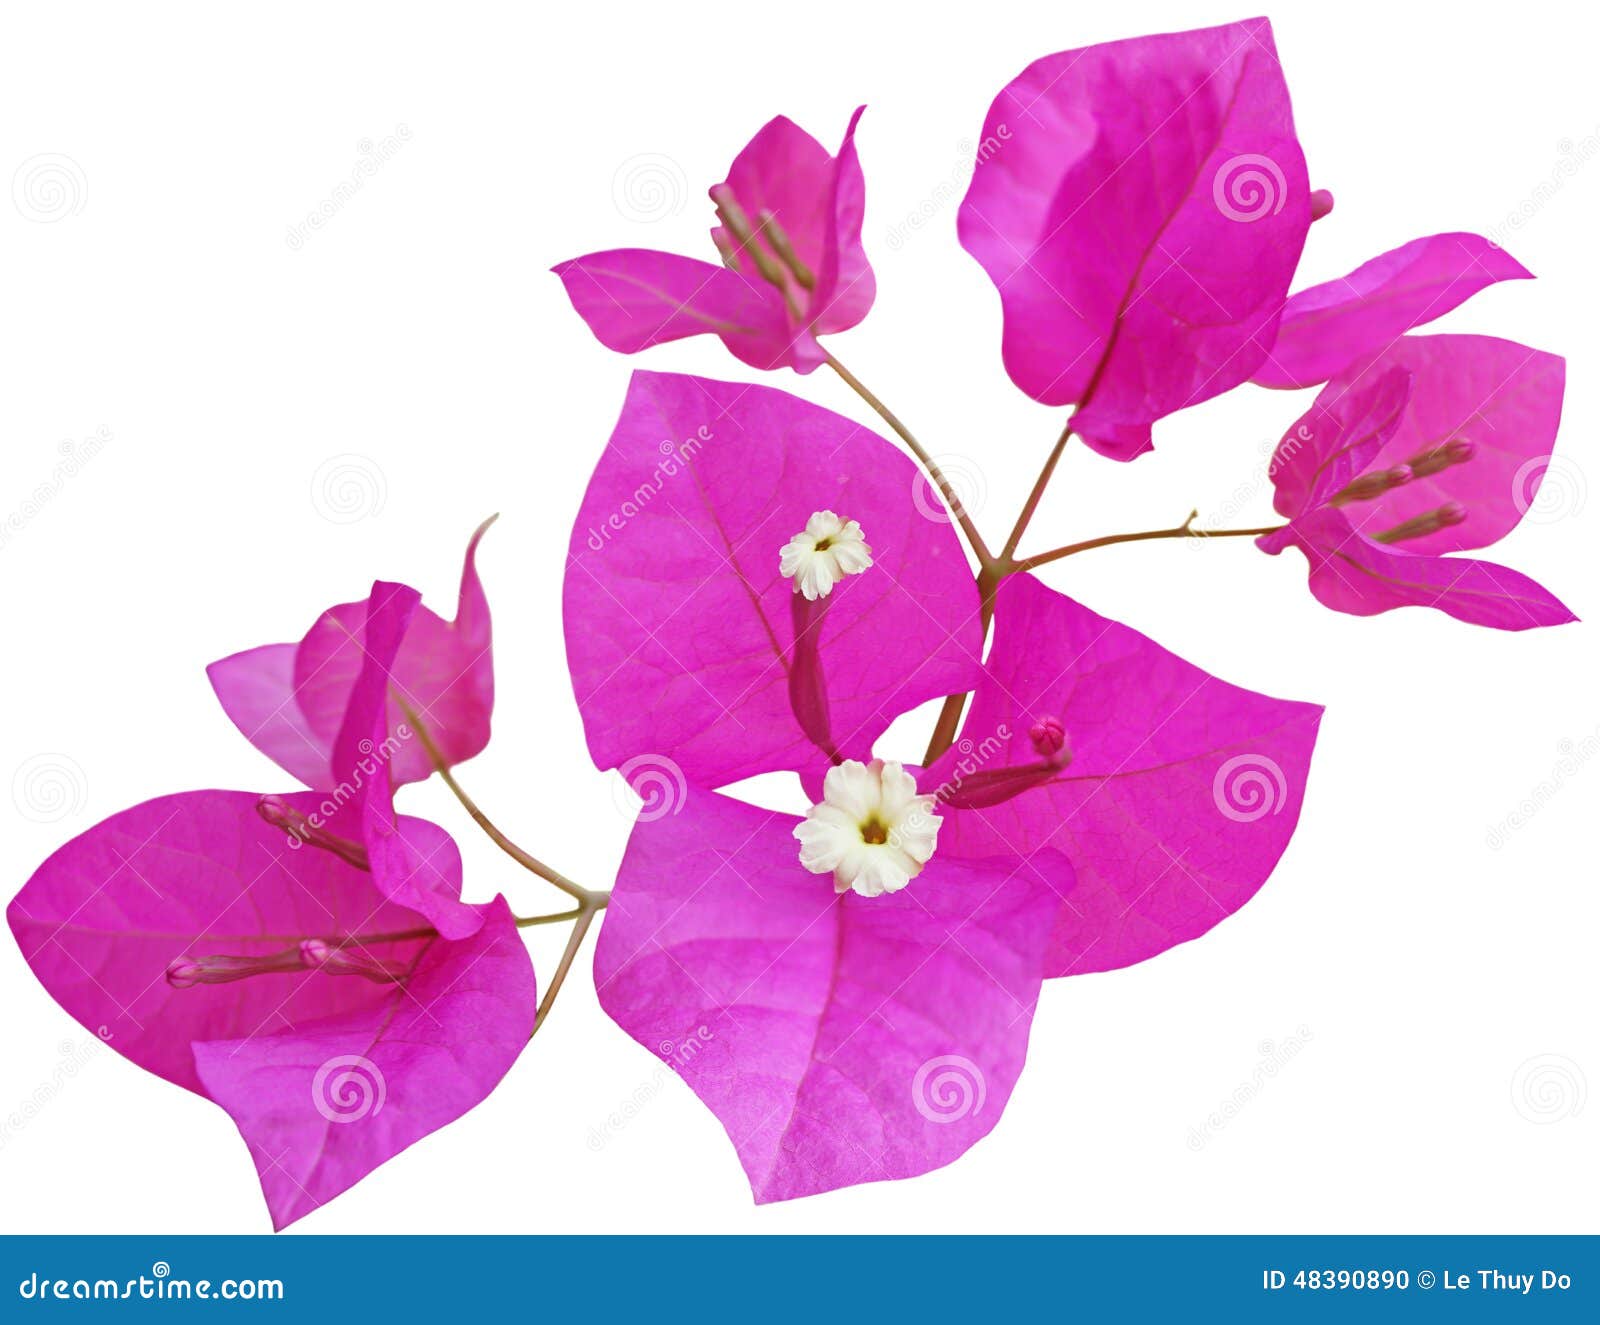 Bougainvillea Glabra Flower Stock Photo - Image: 48390890